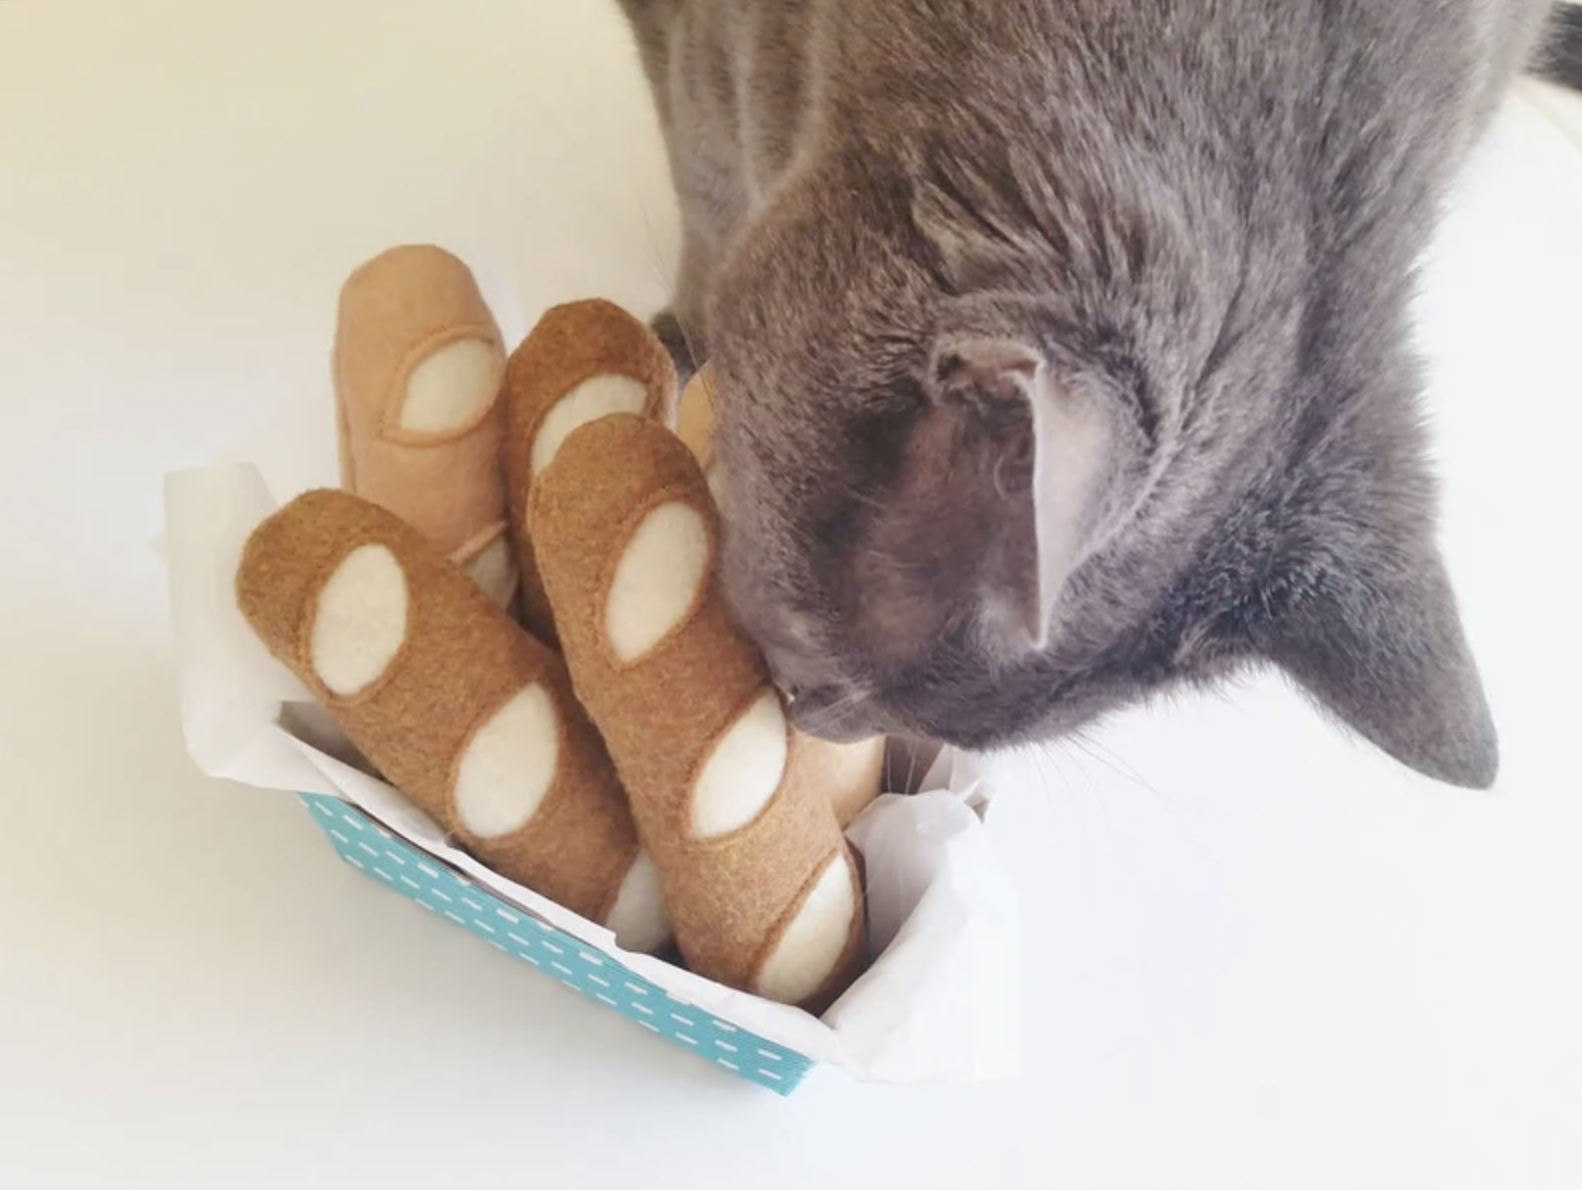 Cat sniffing basket full of bread-shaped plush catnip toys